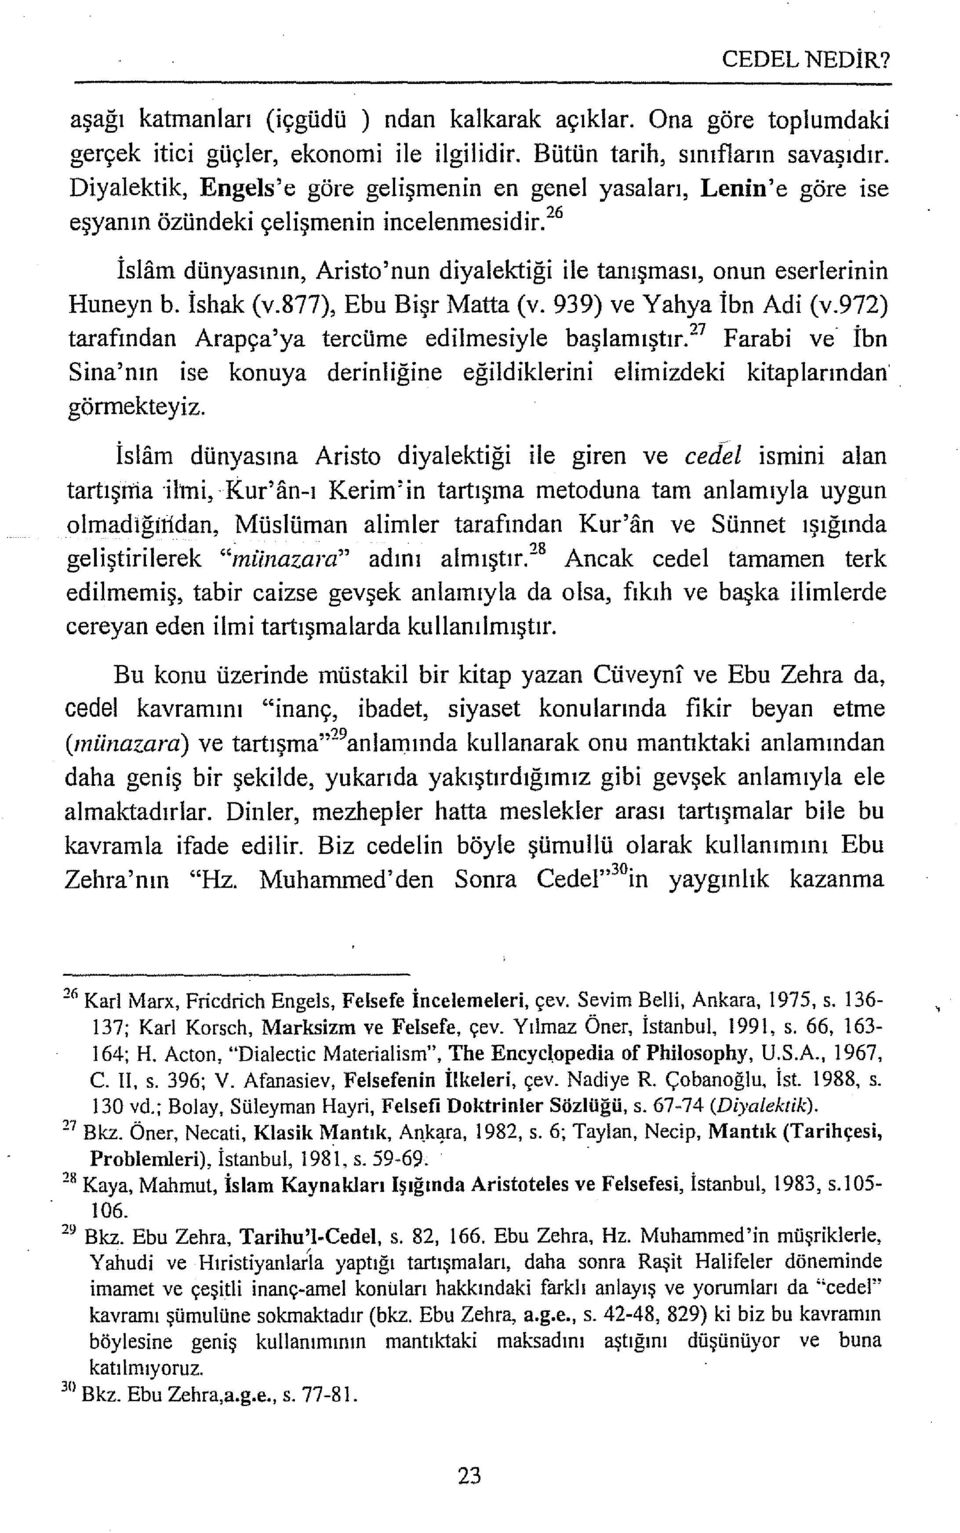 26 İslam dünyasının, Aristo'nun diyalektiği ile tanışması, onun eserlerinin Huneyn b. İshak (v.877), Ebu Bişr Matta (v. 939) ve Yahya İbn Adi (v.